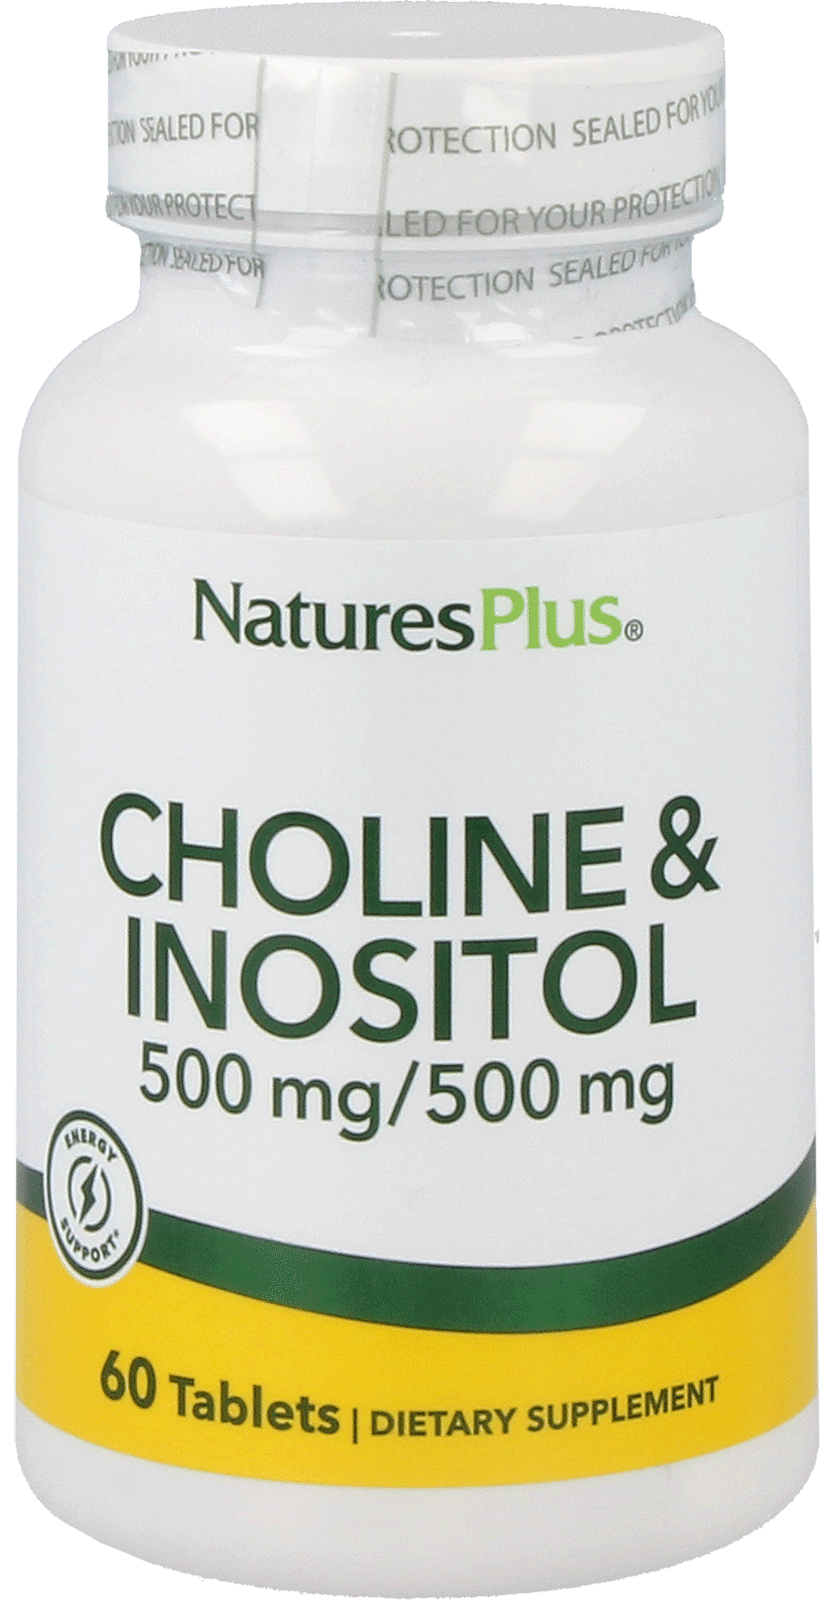 Choline & Inositol 